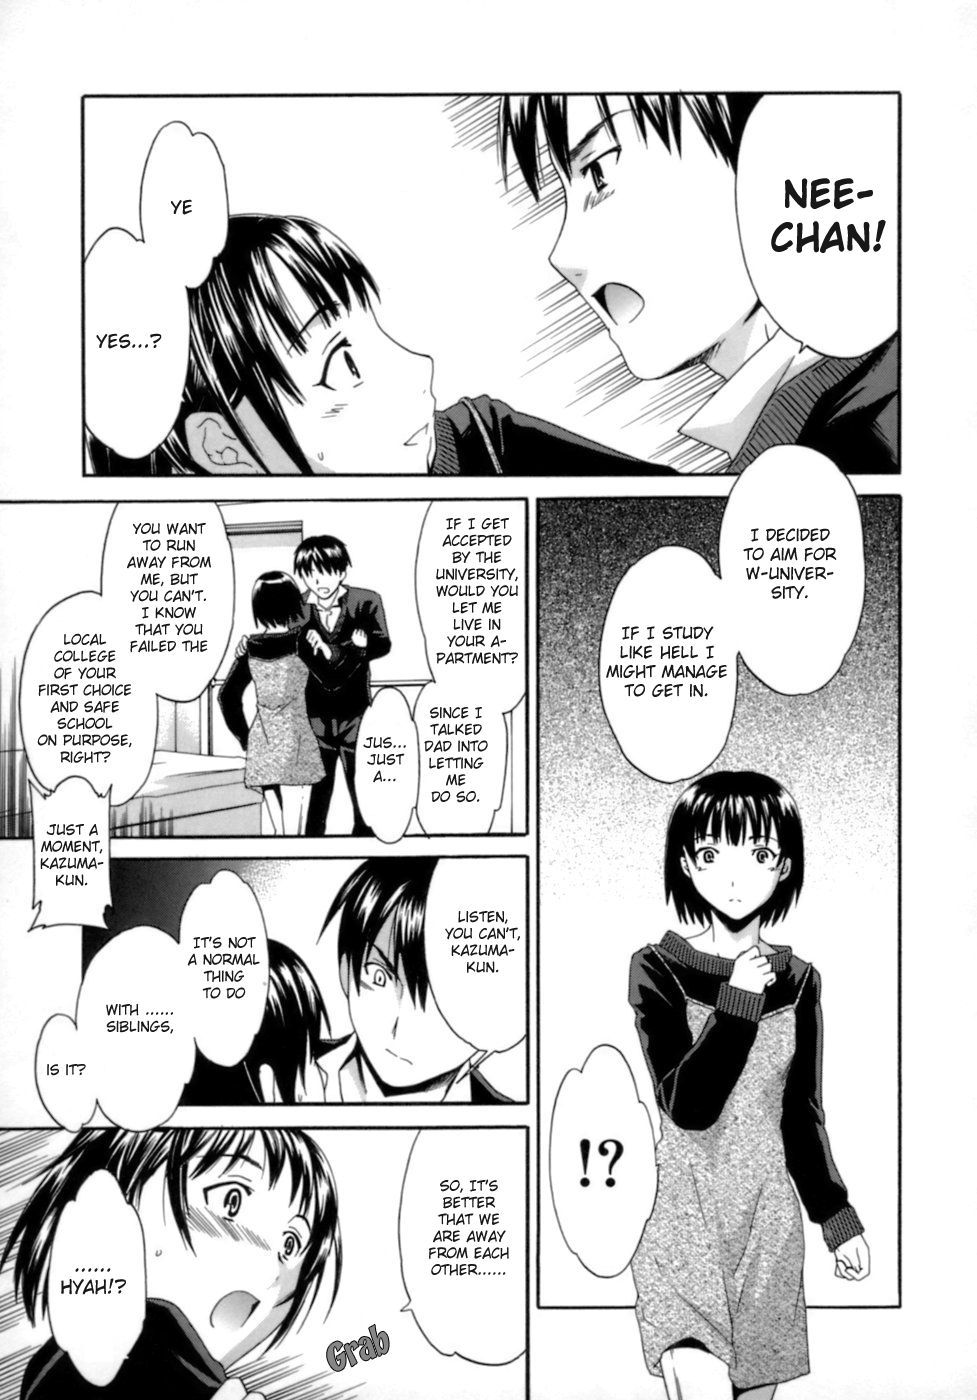 Emotion Chapters 5-6 19 hentai manga